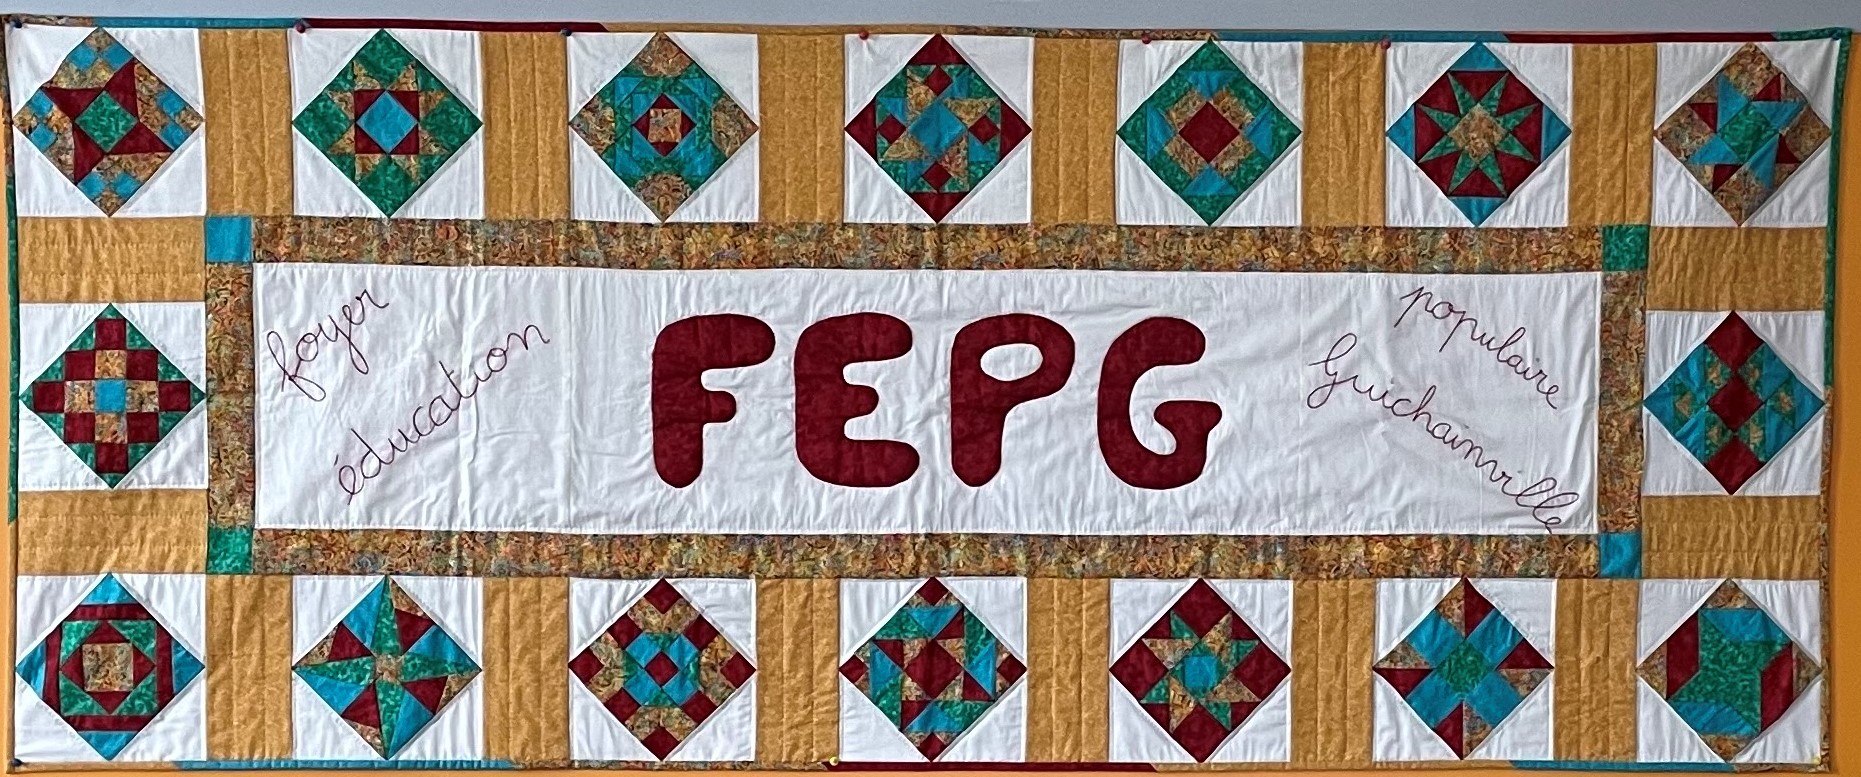 Fresque patchwork FEPG recadree.jpg